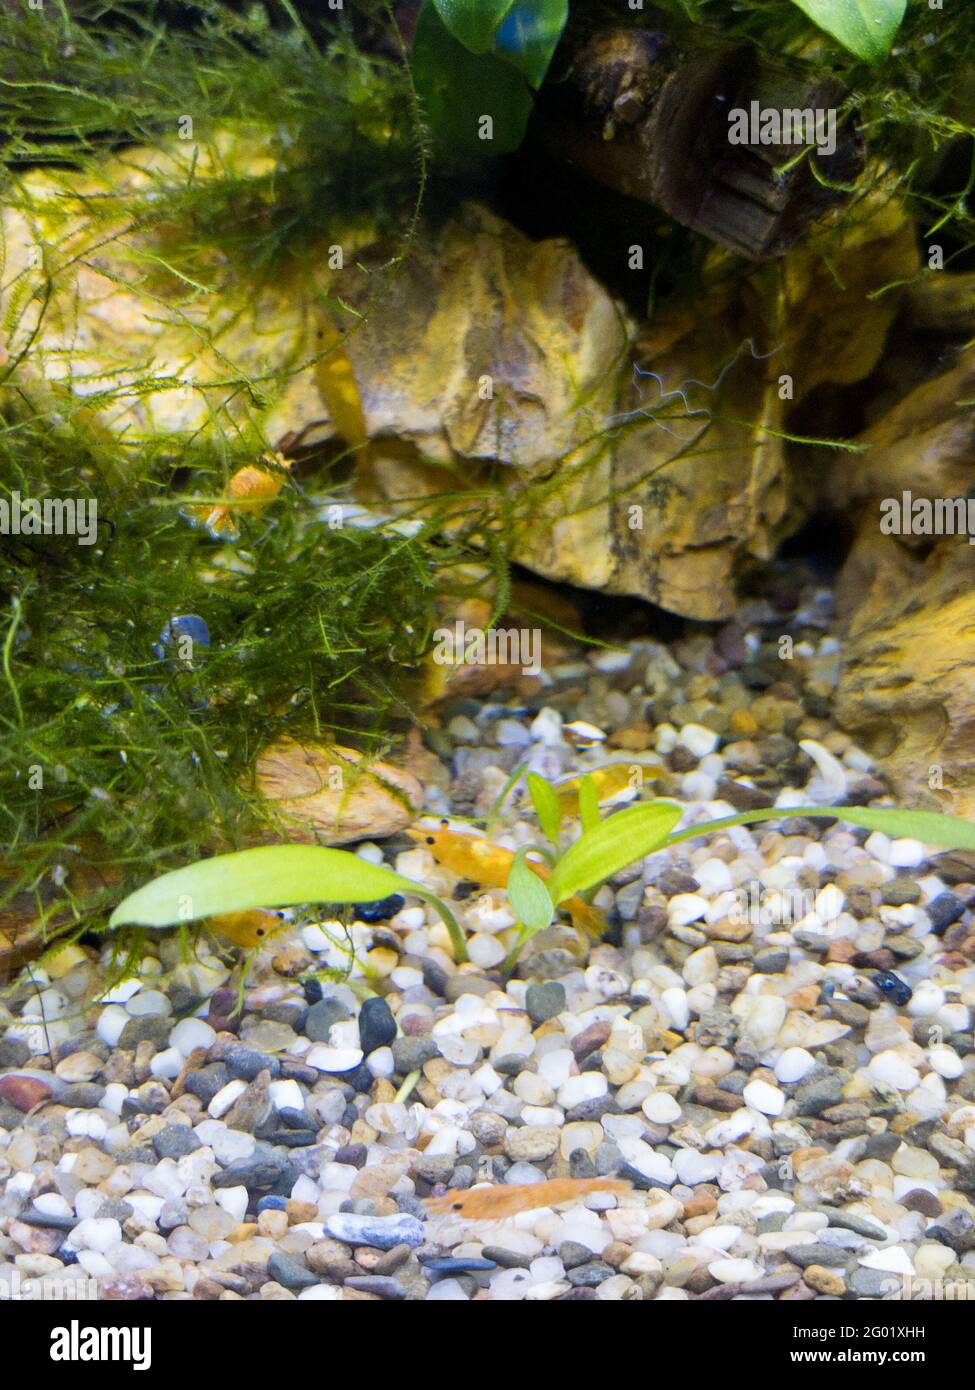 nano aquascaping with shrimps Stock Photo